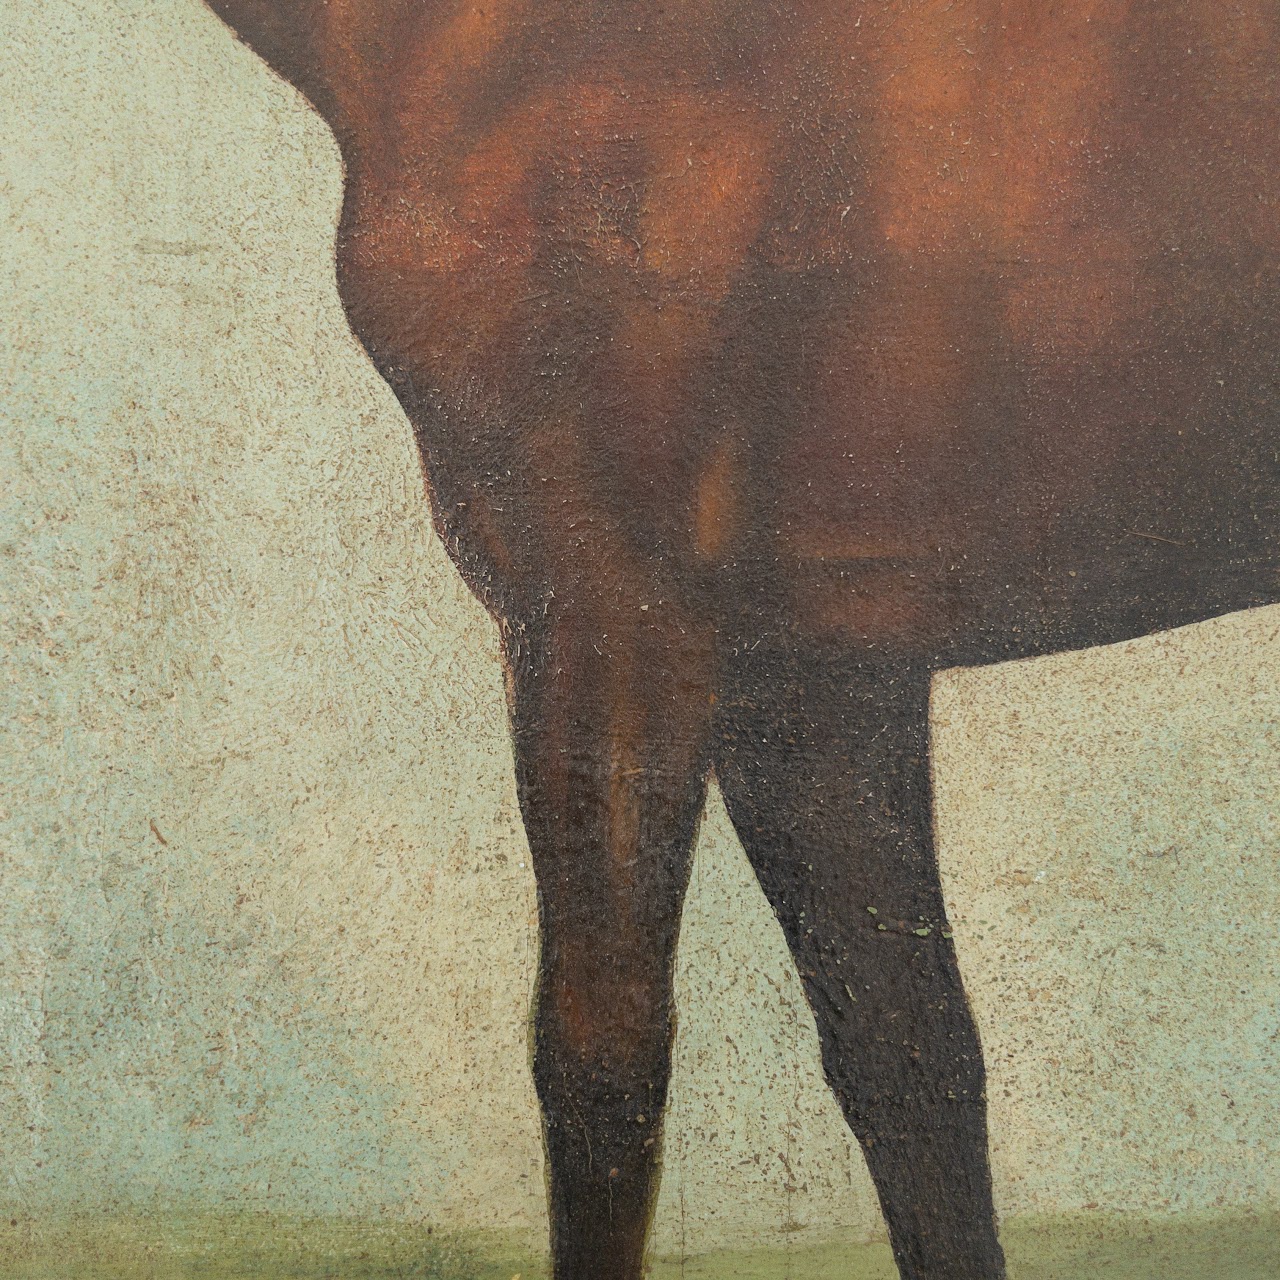 Richard Watson (1840-1921) Signed Equine Painting